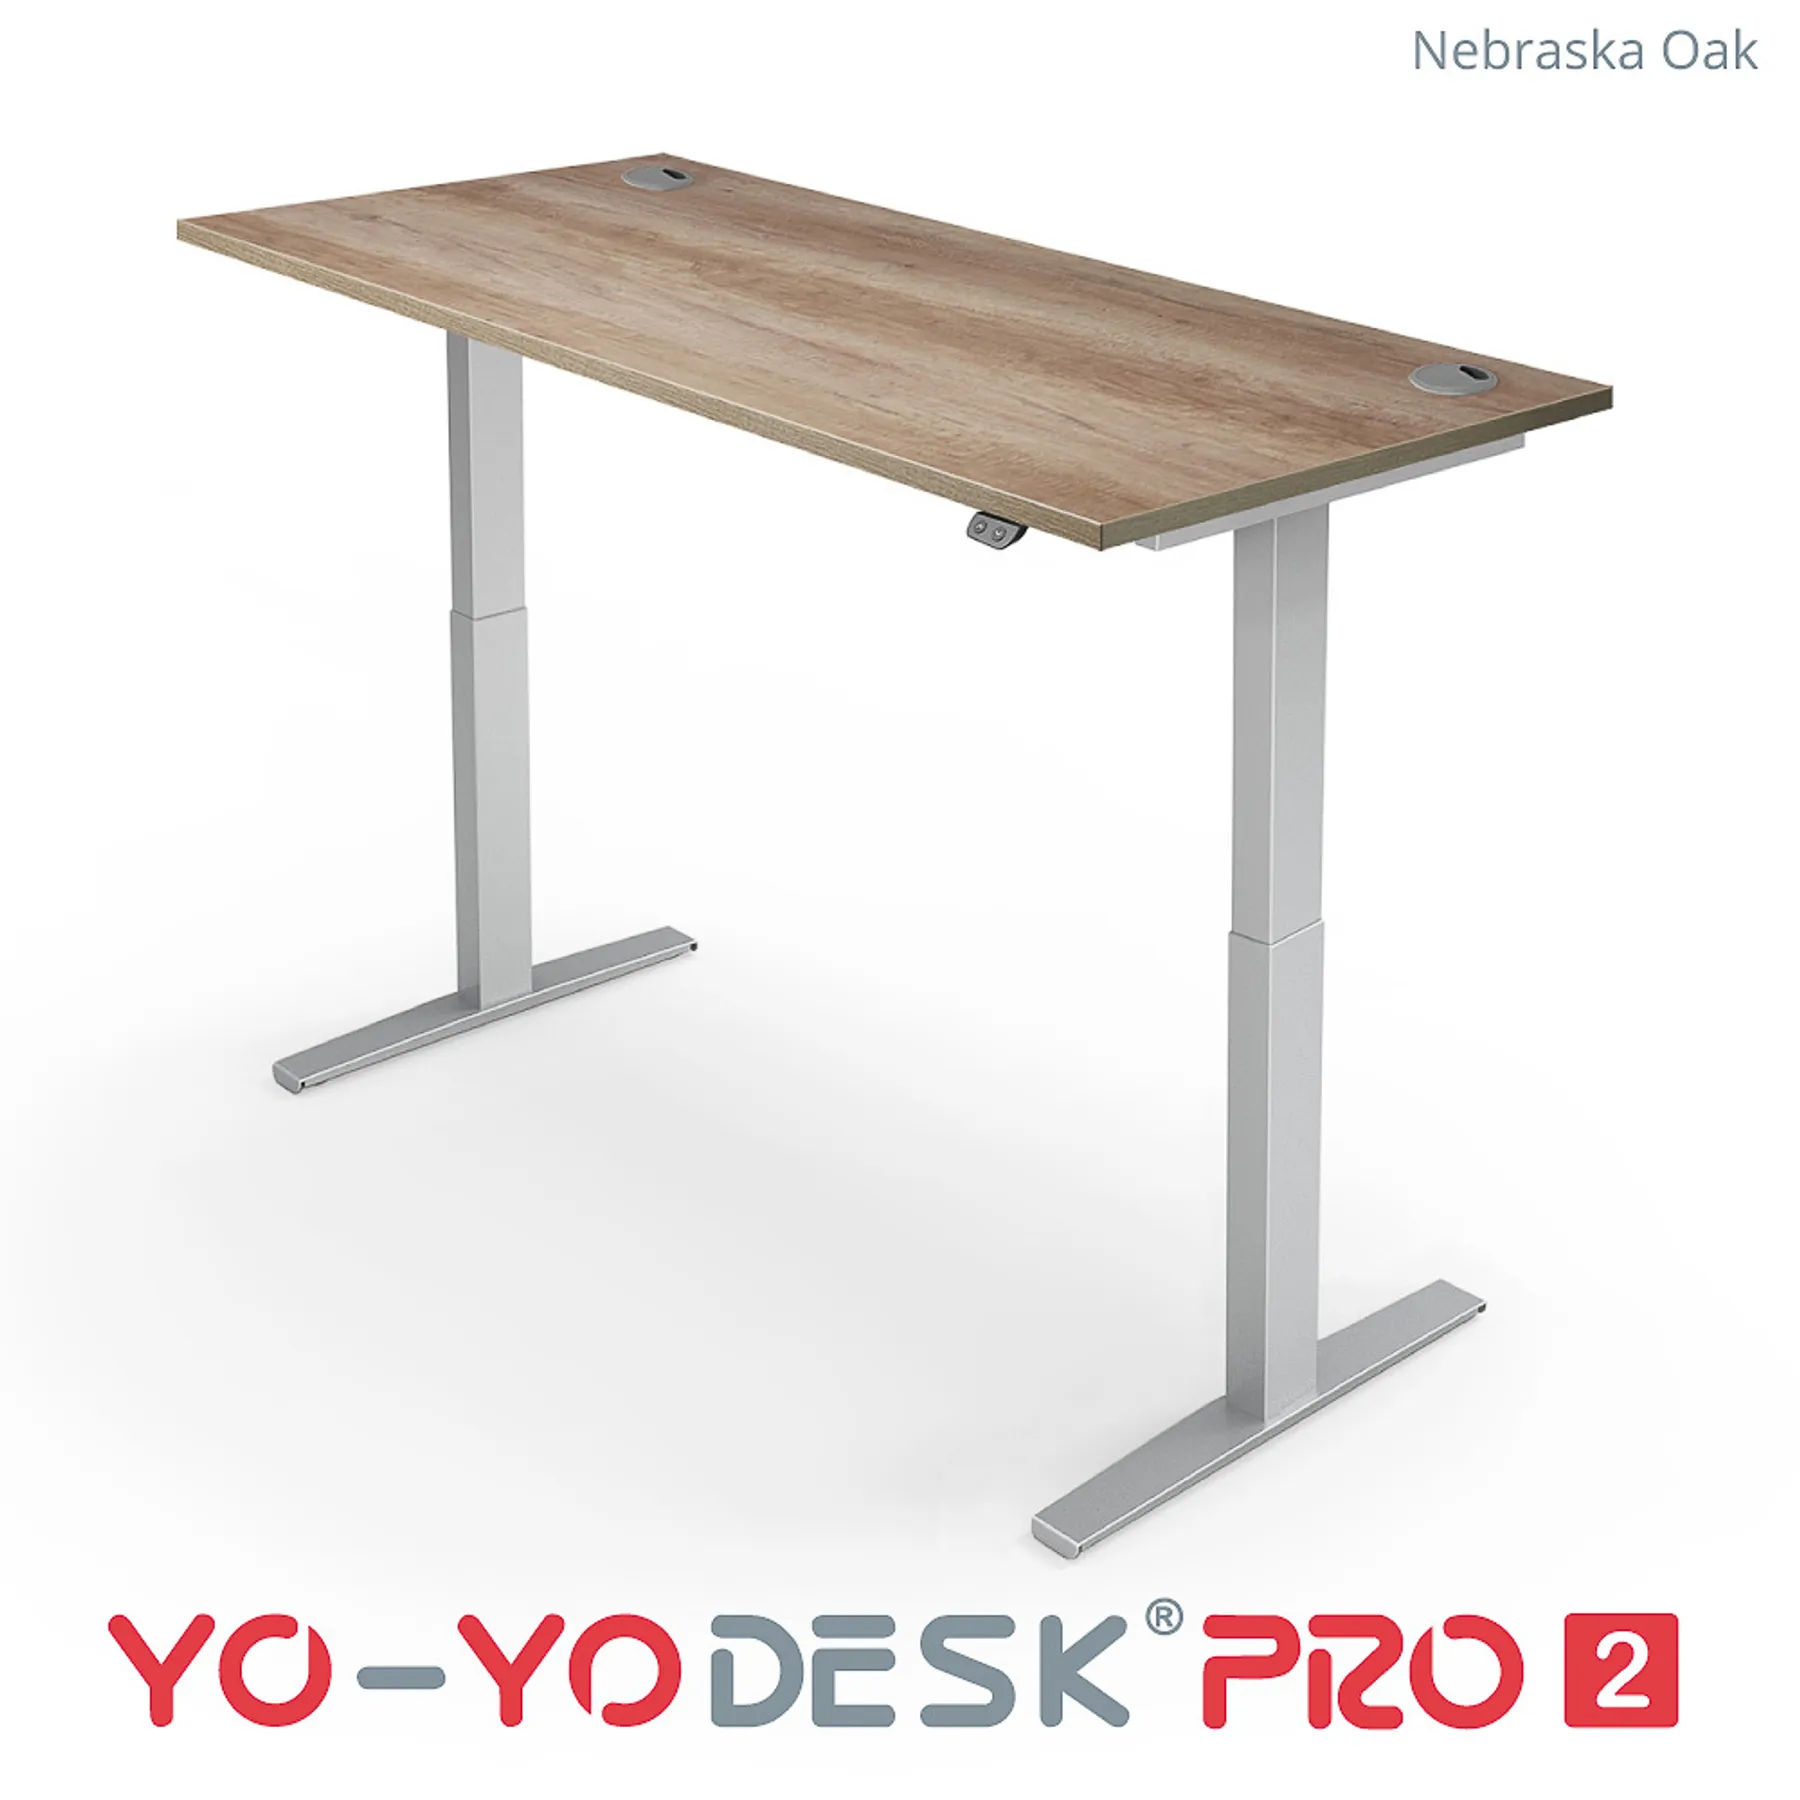 Lof direct yoyo desk pro 2 Chrome frame Nebraska oak